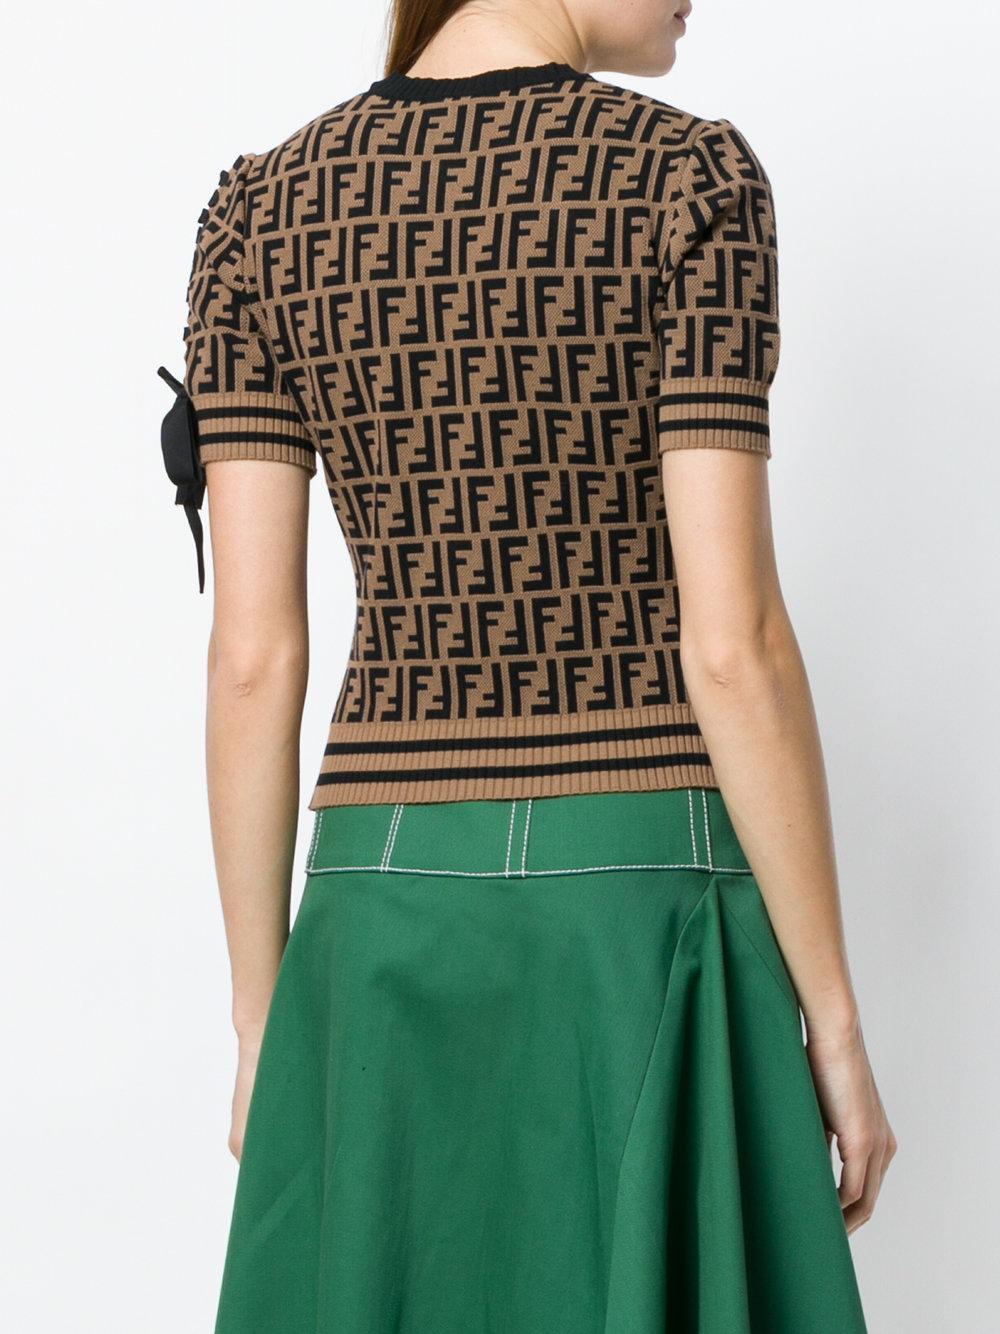 Fendi Synthetic Logo Short-sleeve Sweater in Brown - Lyst